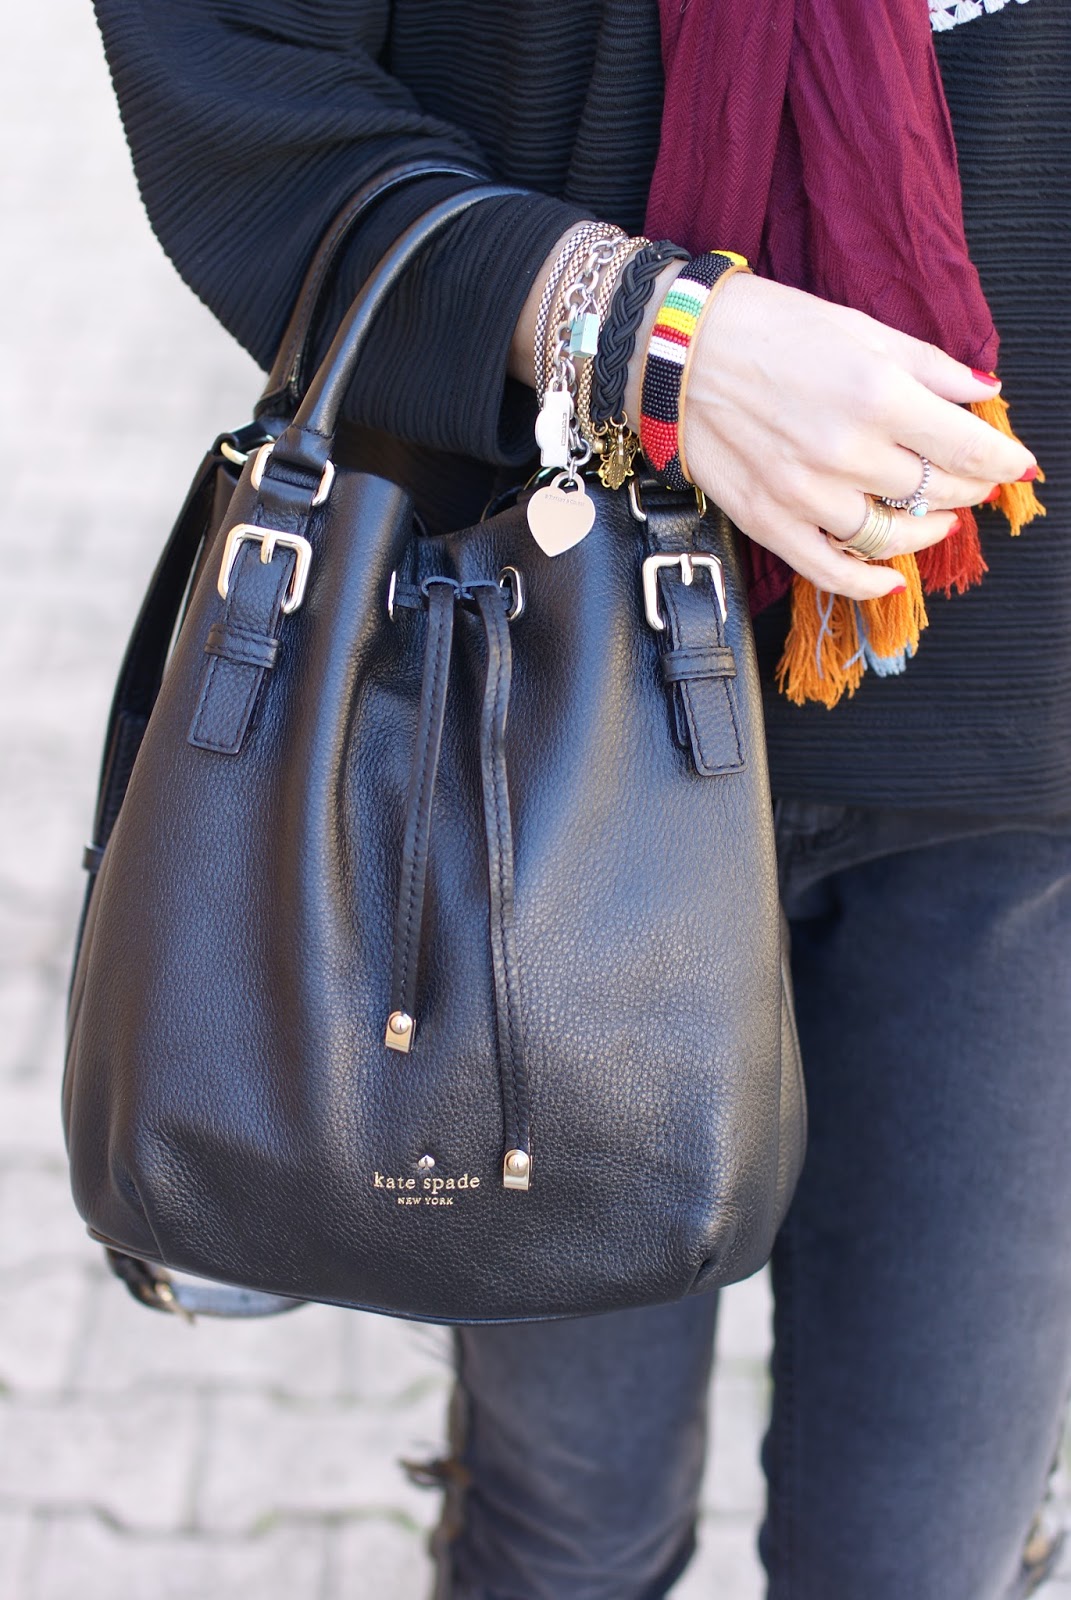 Kate Spade New York bucket bag on Fashion and Cookies fashion blog, fashion blogger style